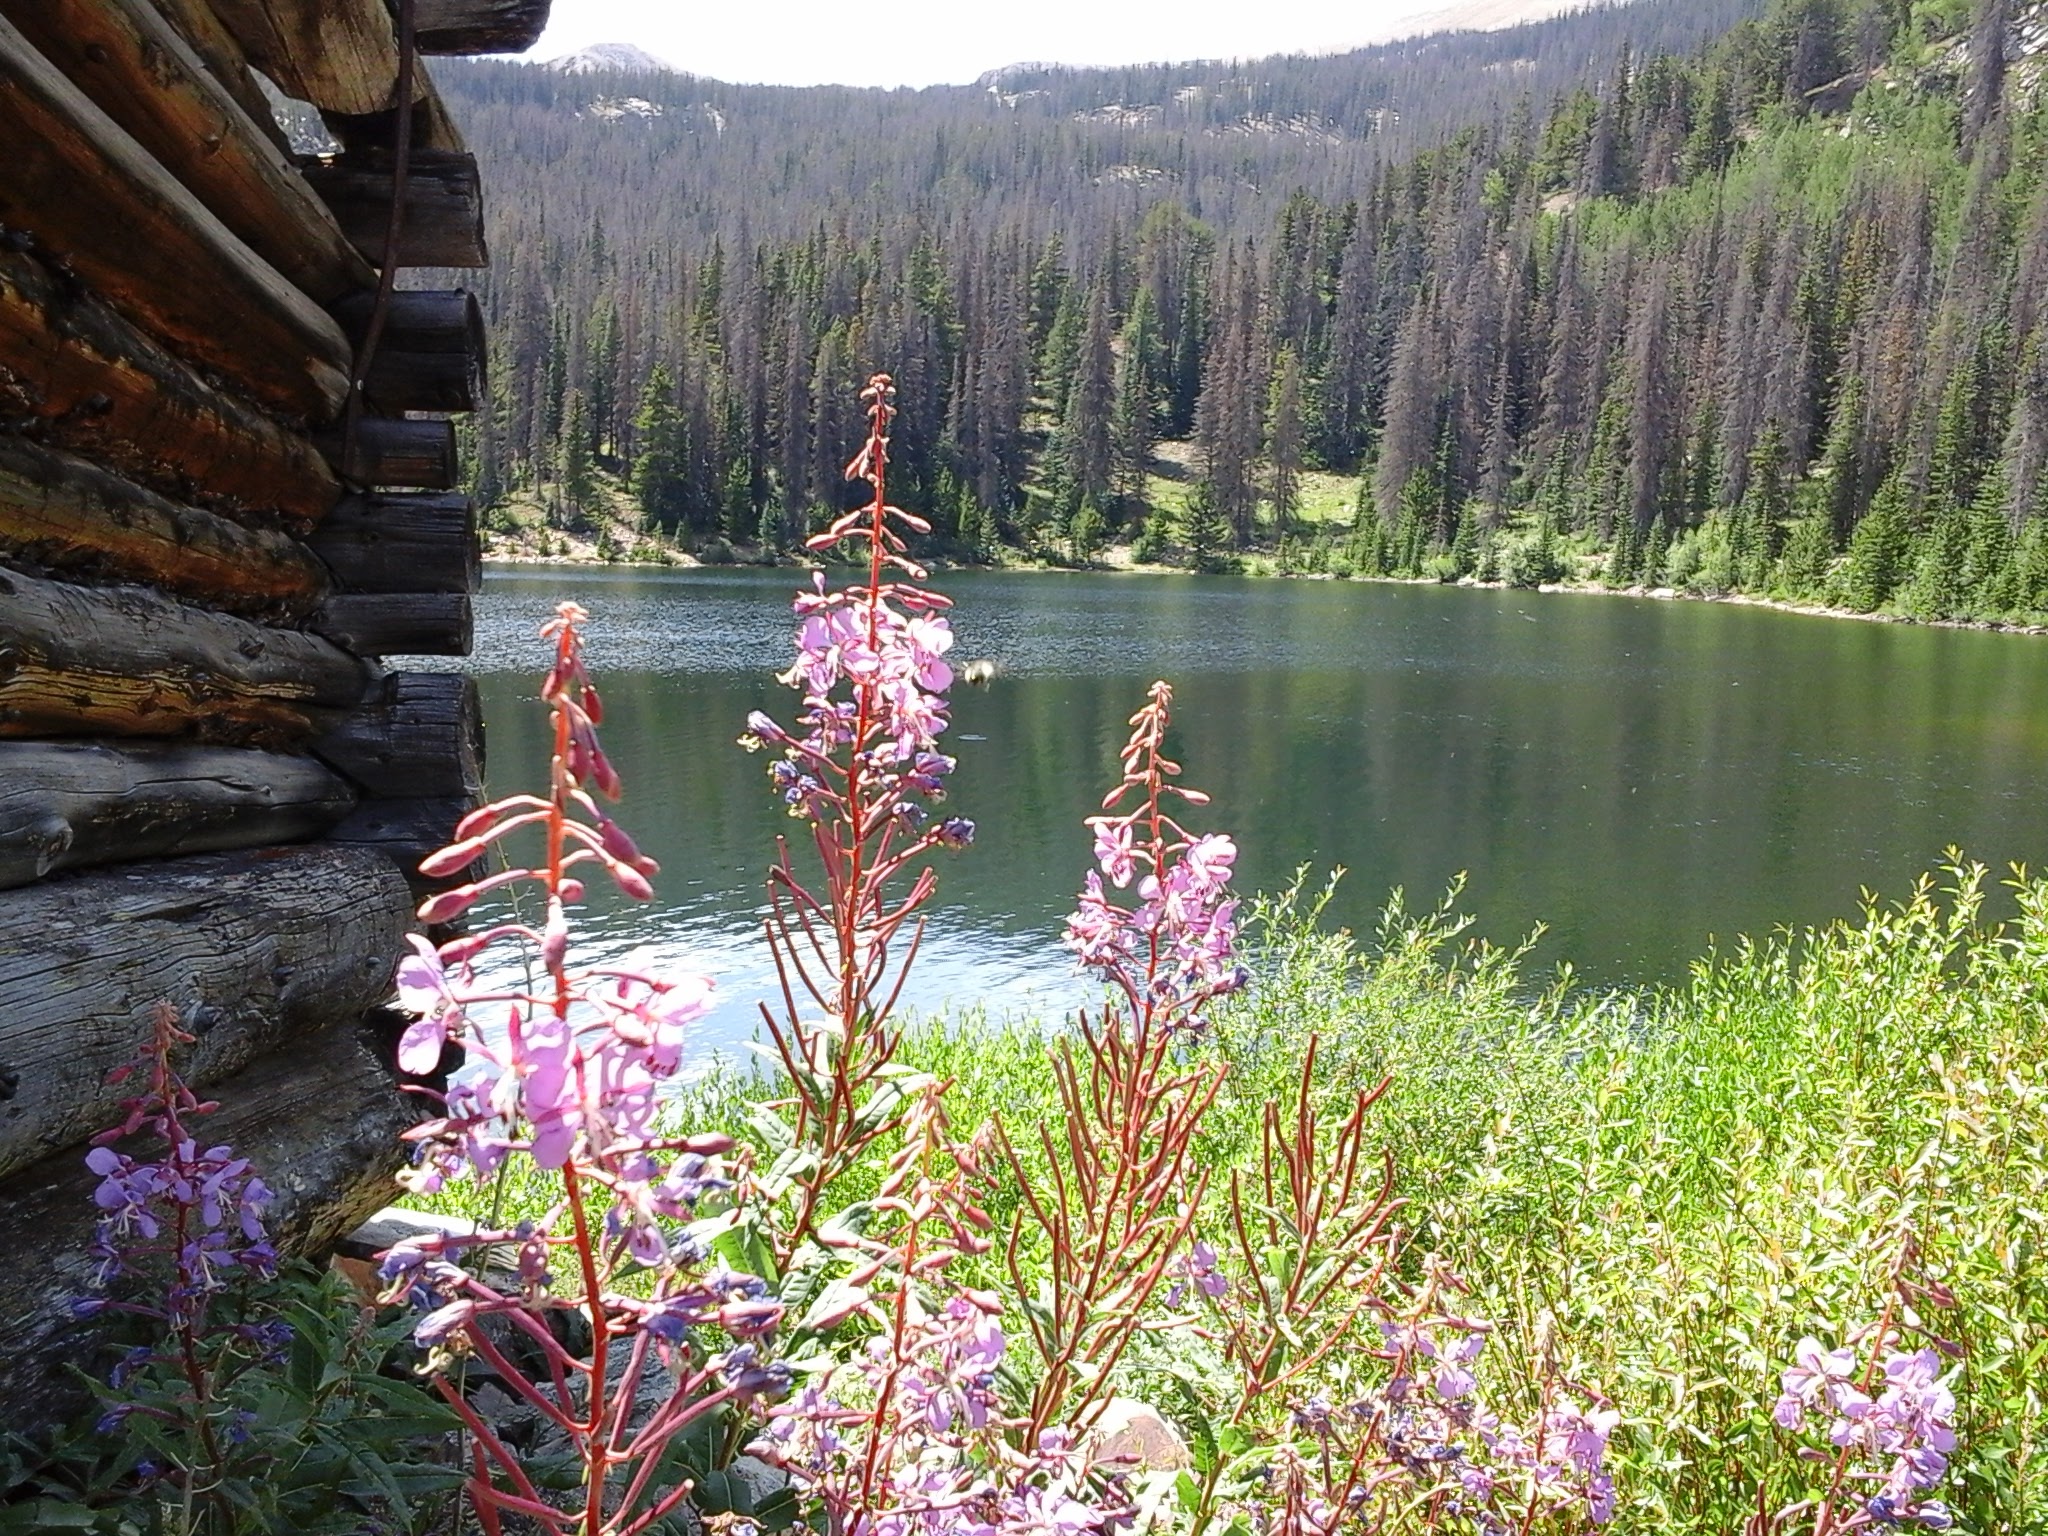 Wild flowers along the bank of Boss Lake.